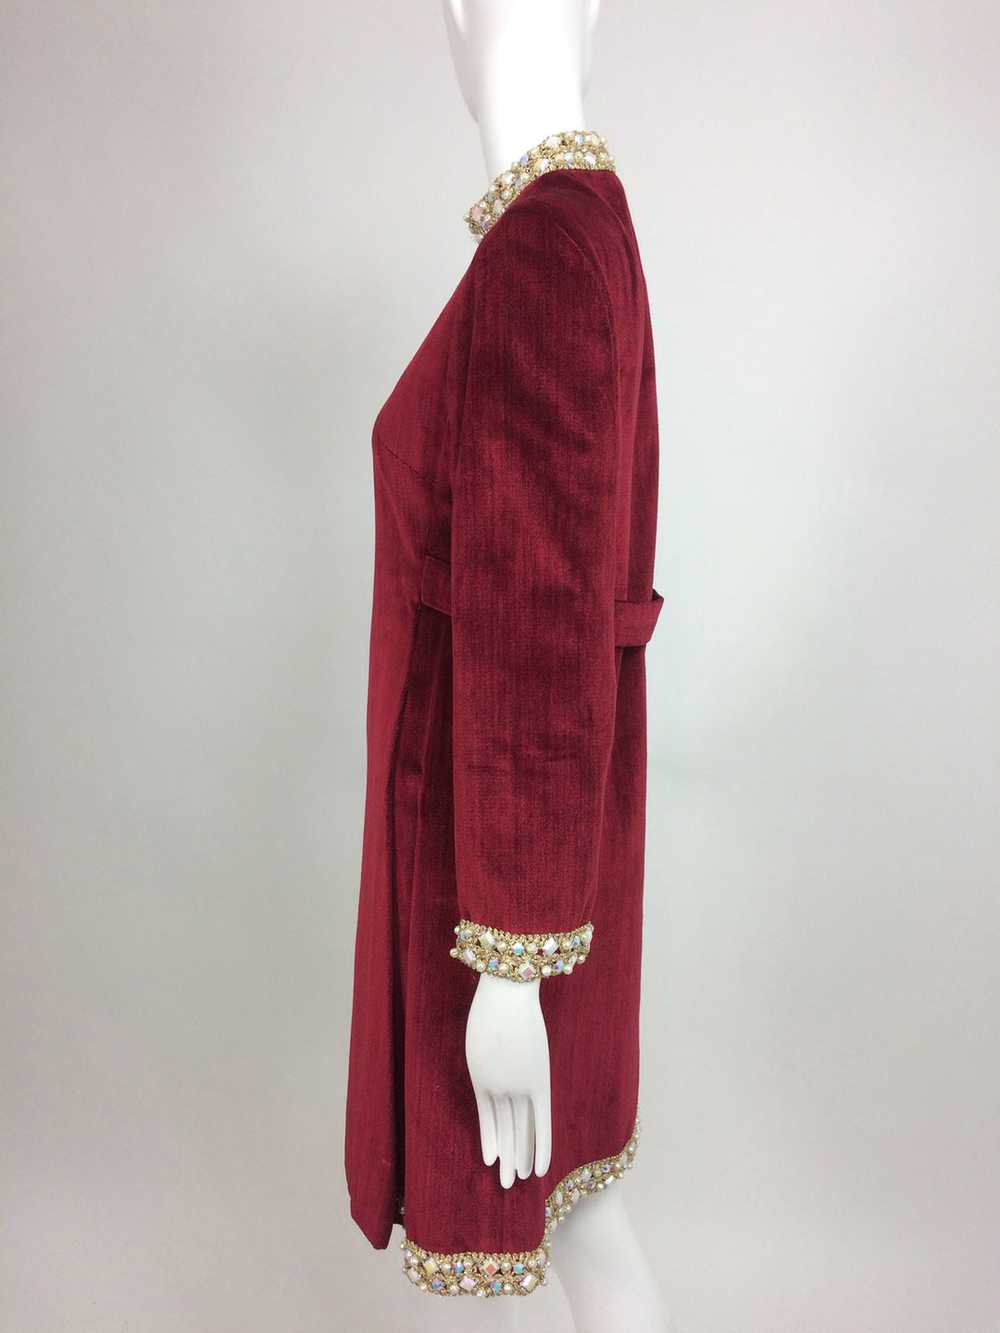 Garnet Red Silky Cotton Velvet Jewel Trim Mod Dre… - image 4